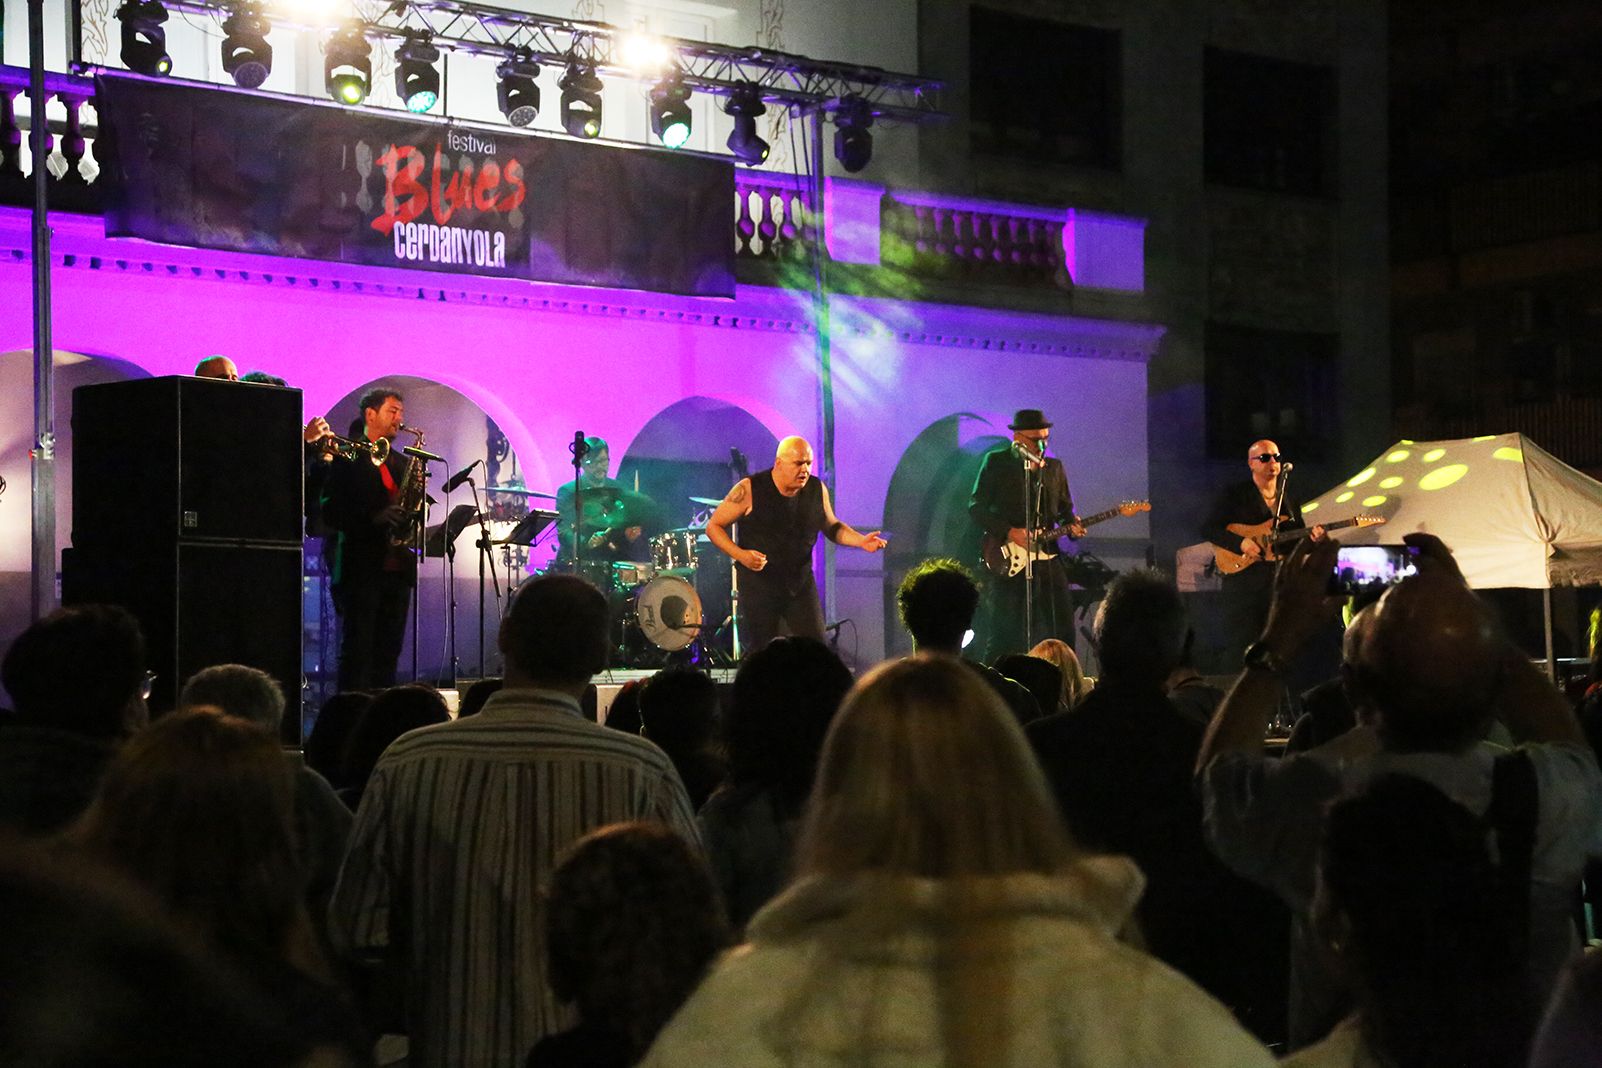 Concert de Mr. Dynamite James Brown Experience al Festival de Blues. FOTO: Anna Bassa